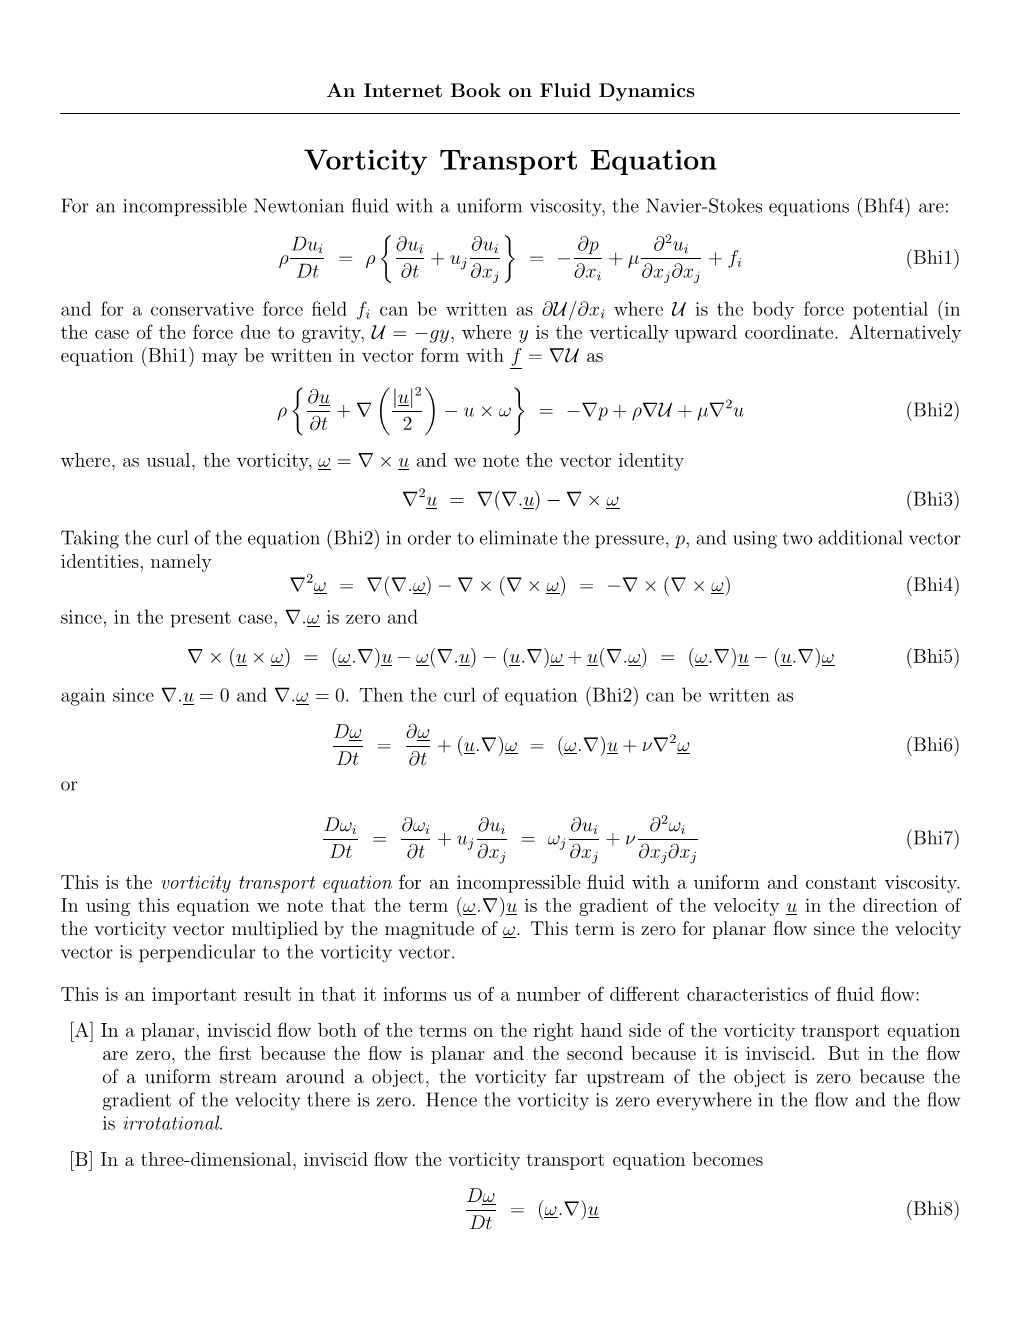 Vorticity Transport Equation